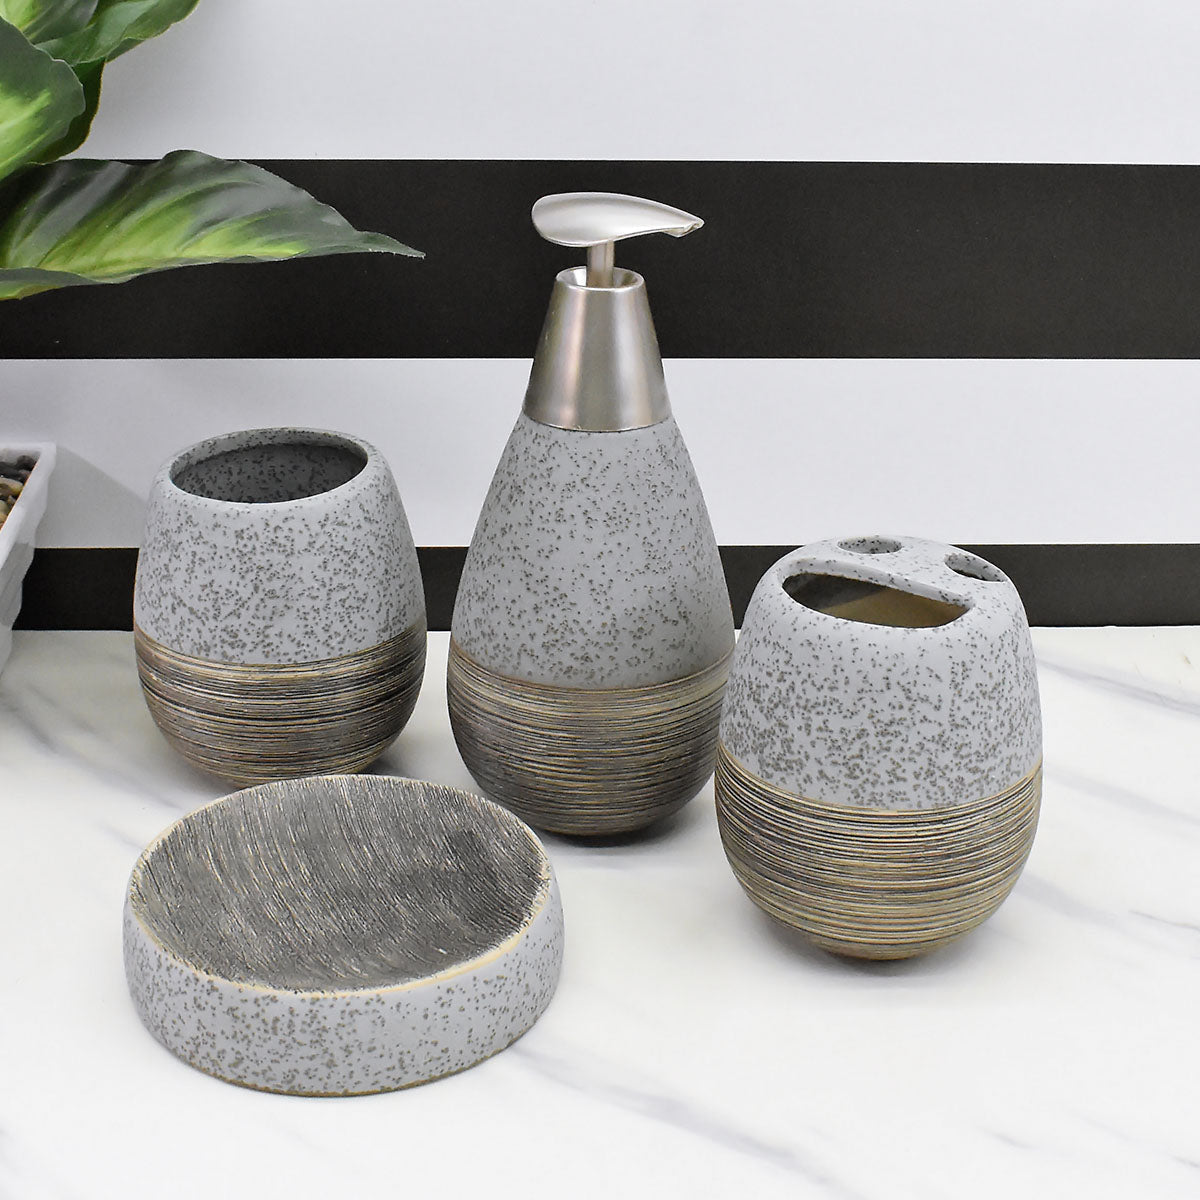 Ceramic Bathroom Accessories Set of 4 Bath Set with Soap Dispenser (8850)